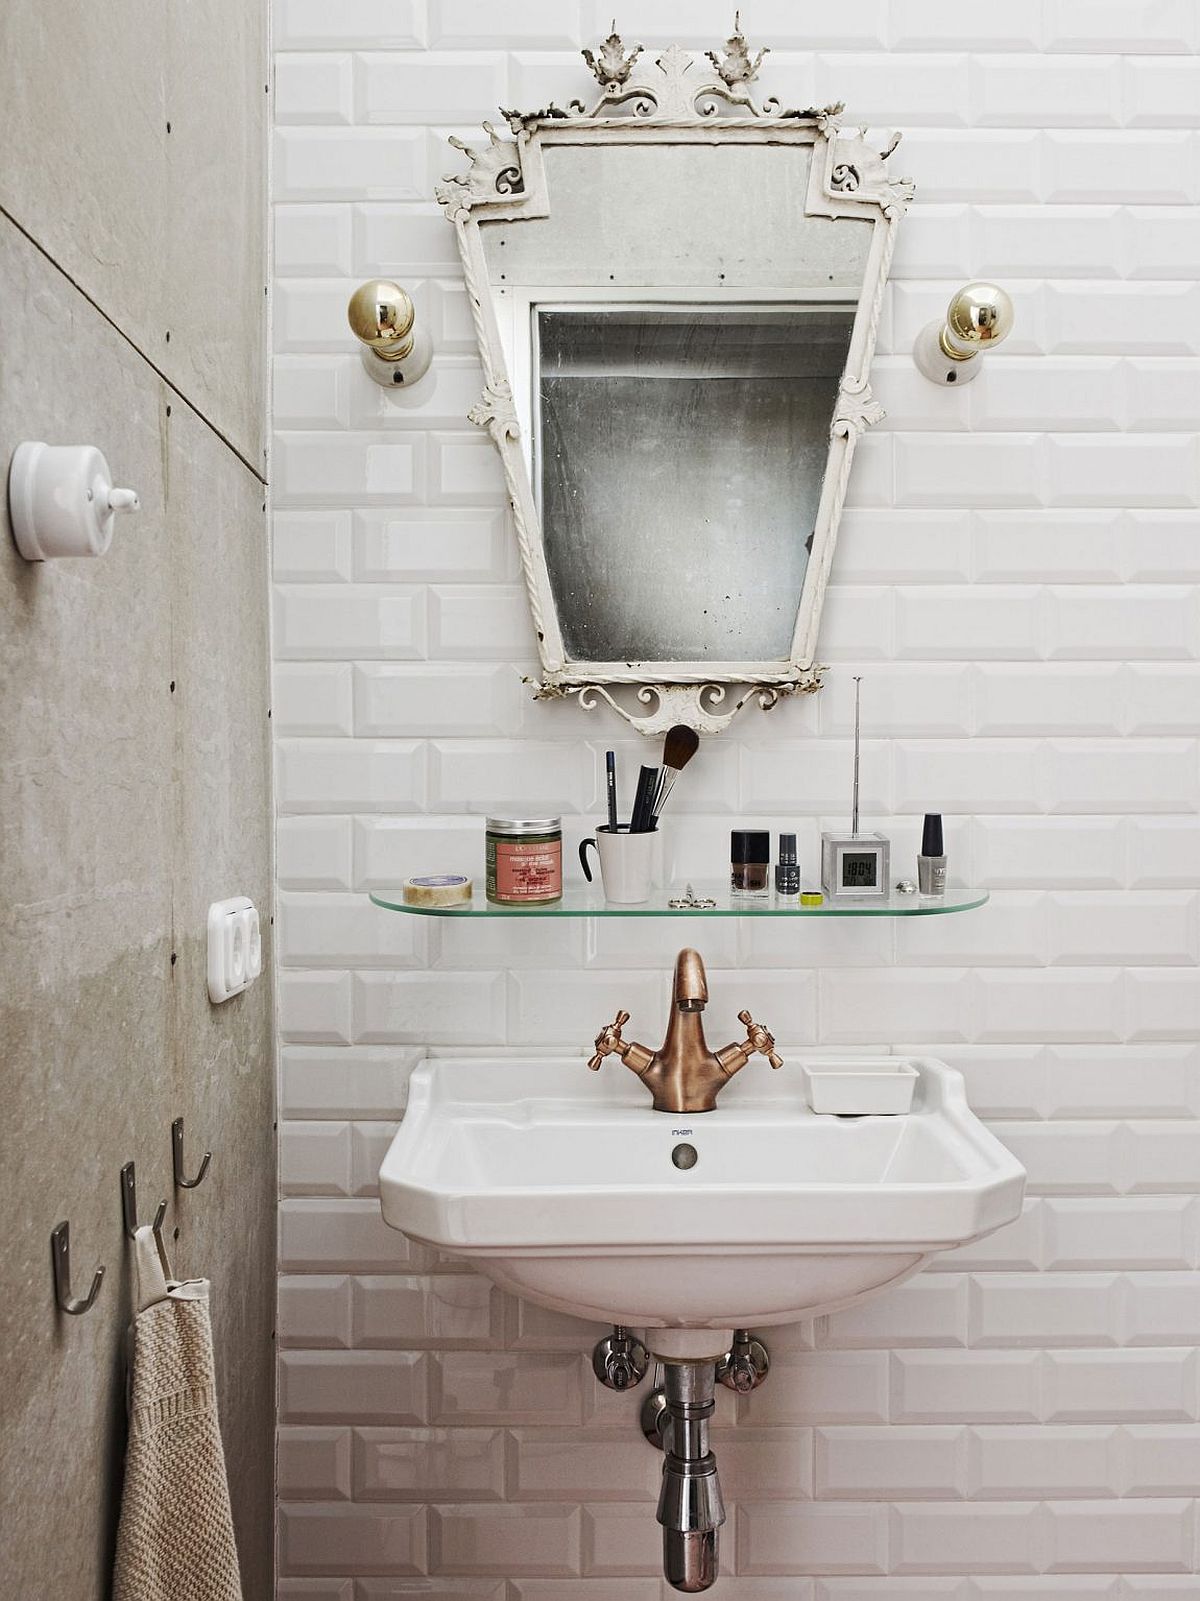 Retro industrial bathroom of the Budapest apartment with tiled backsplash